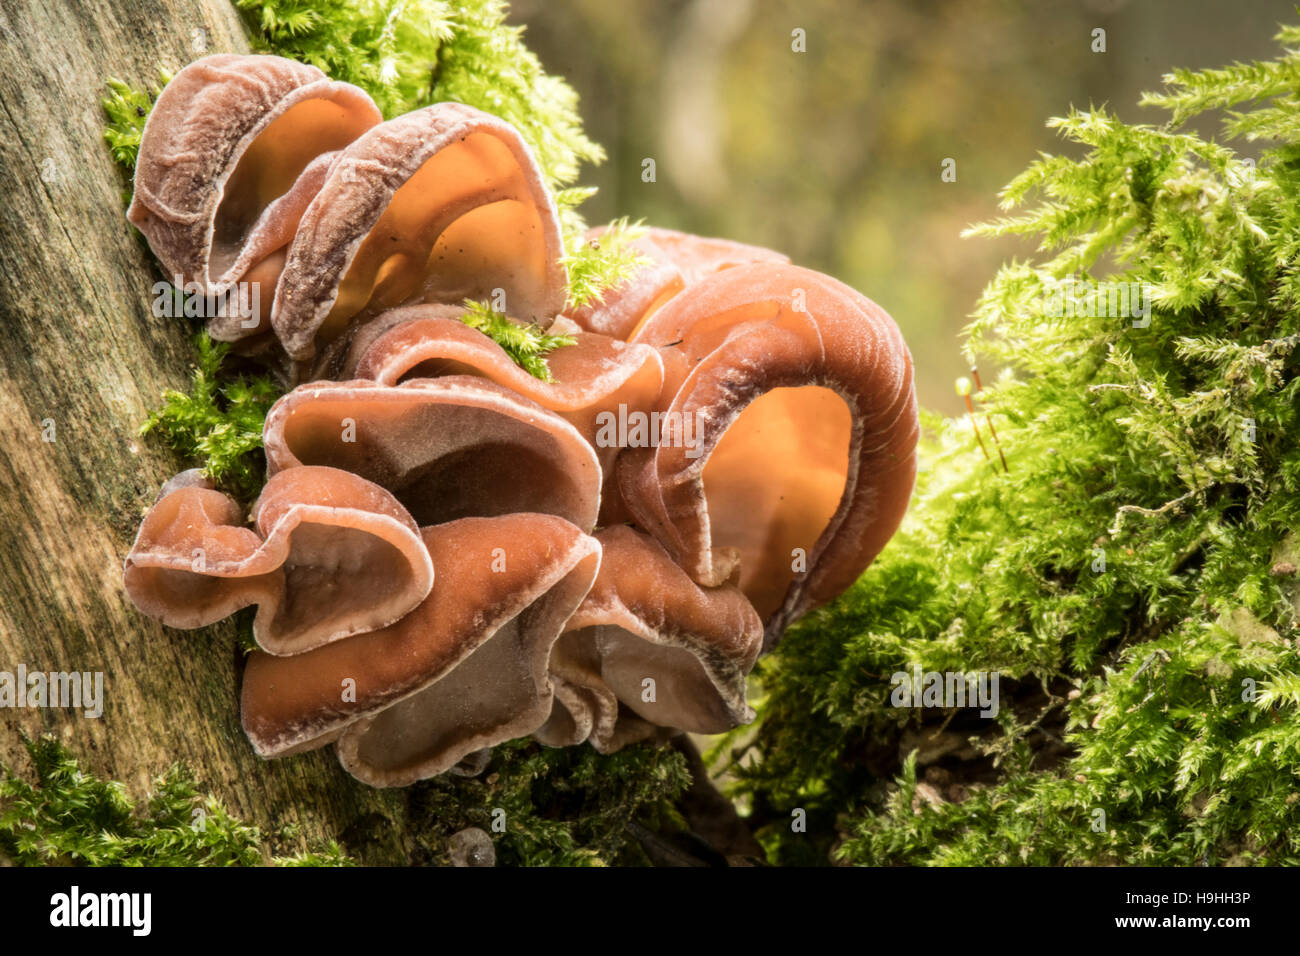 Jews Ear fungus growing on tree Stock Photo